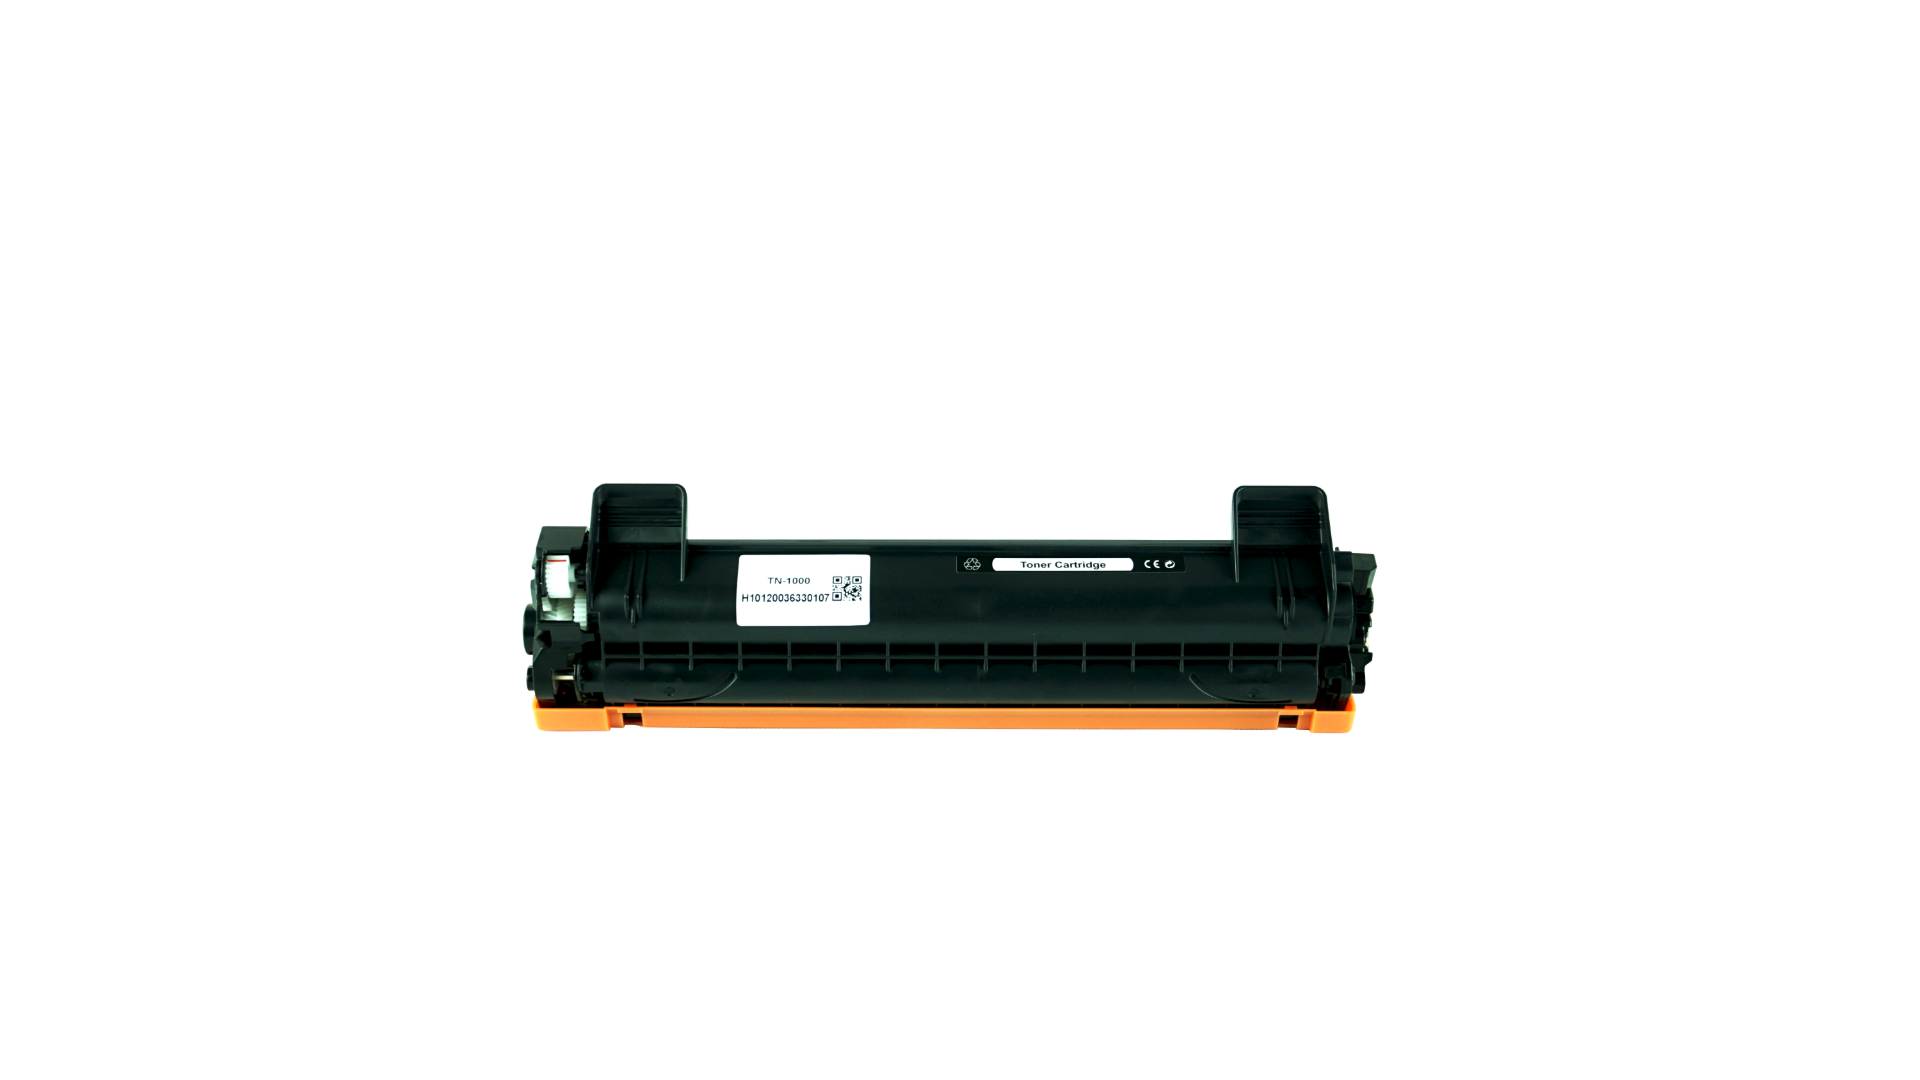 Compatible TN-1000 Laser Toner Cartridge For Brother HL1110 / HL1110E / HL1110R / HL1112 / HL1112E / HL1202R / HL1210 / DCP1510 / DCP1510R / DCP1512 / DCP1512R / DCP1602R / DCP1610W / DCP1612W / MFC1810 / MFC1810E / MFC1810R / MFC1815 / MFC1910WHL1210